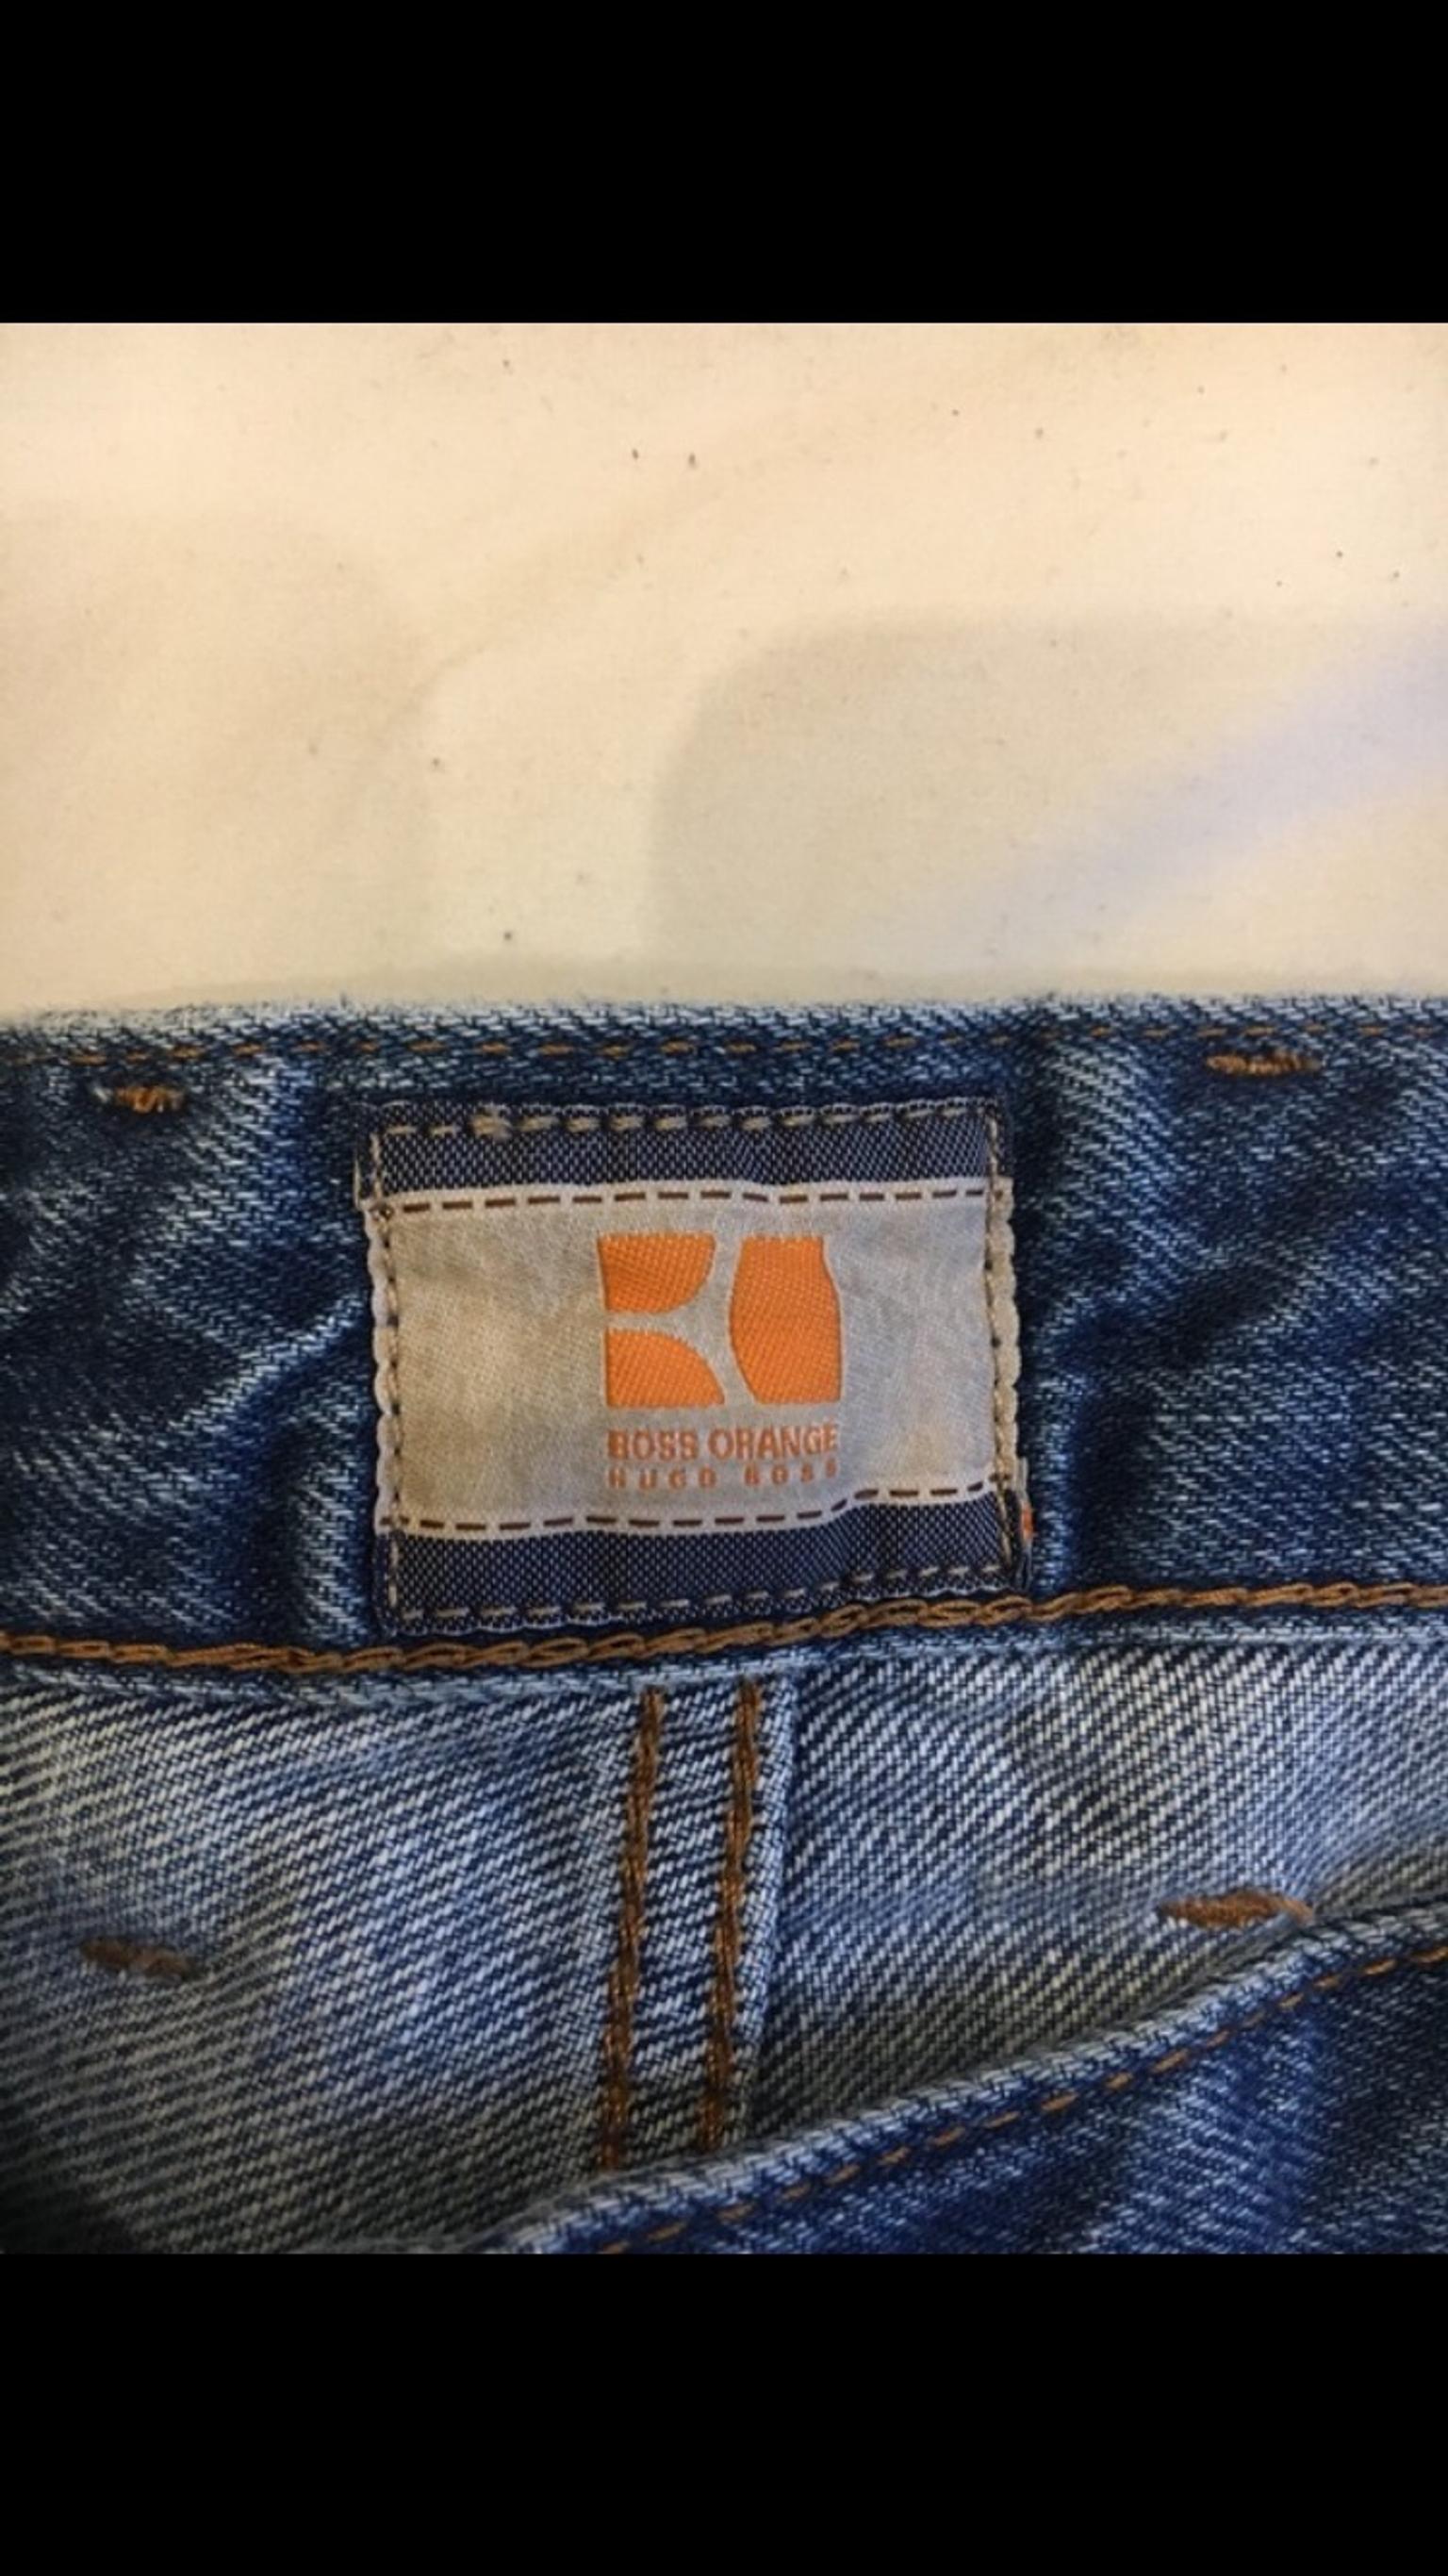 hugo boss orange jeans sale